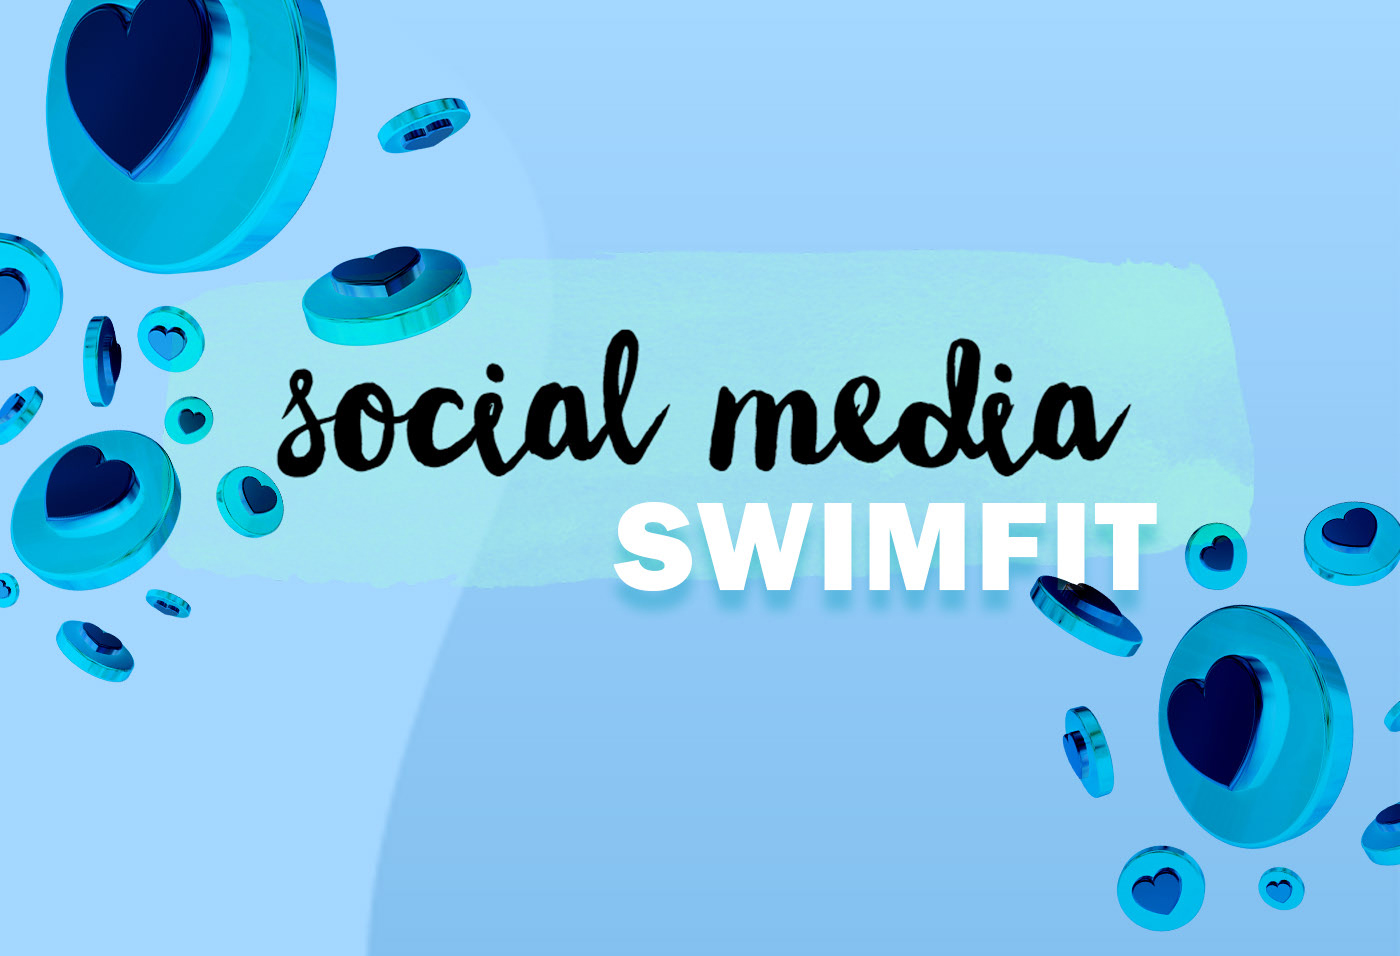 SwimFit Social Media